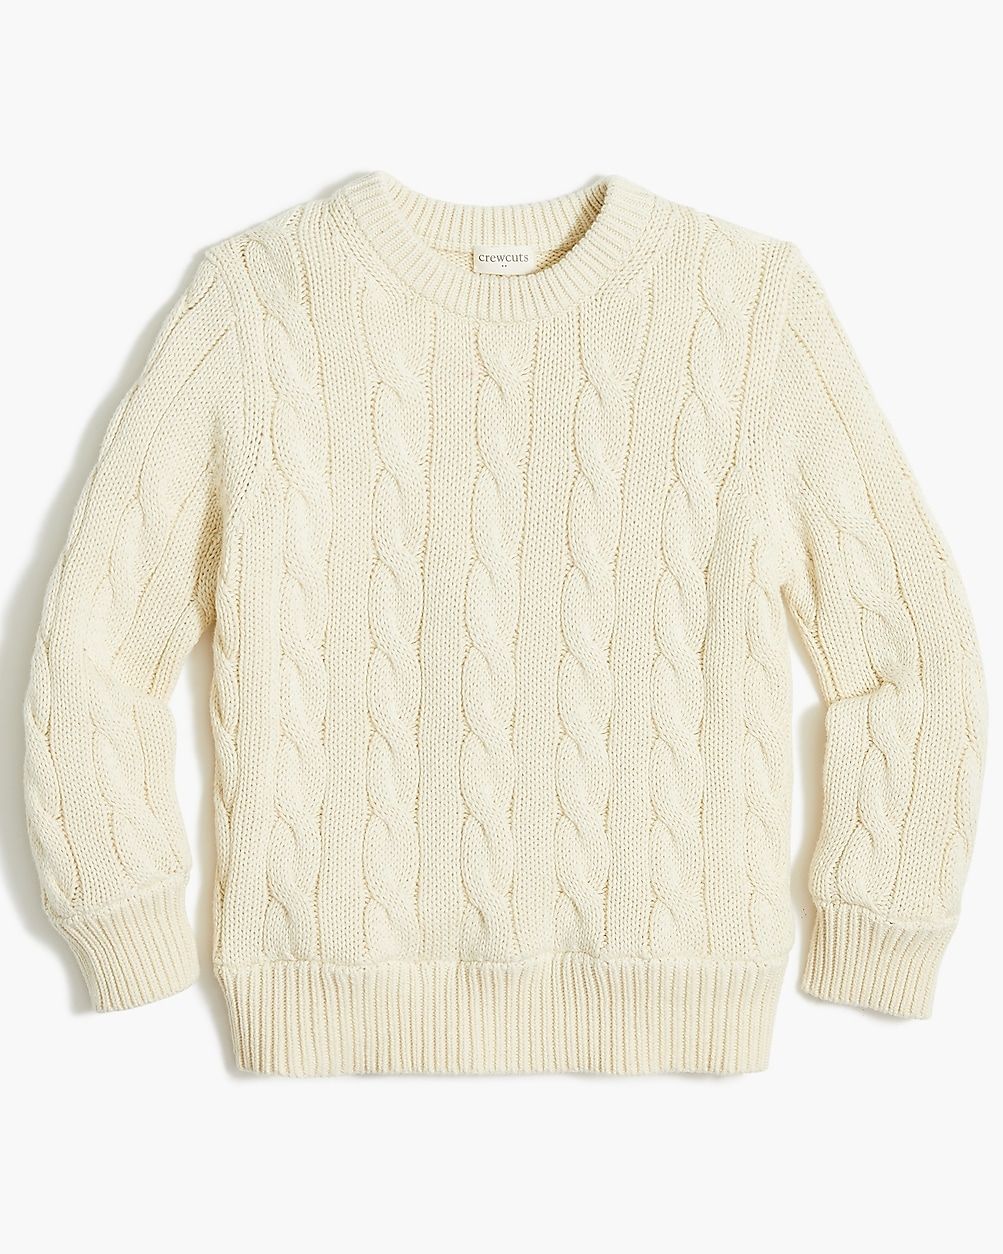 Kids' cable crewneck sweater | J.Crew Factory